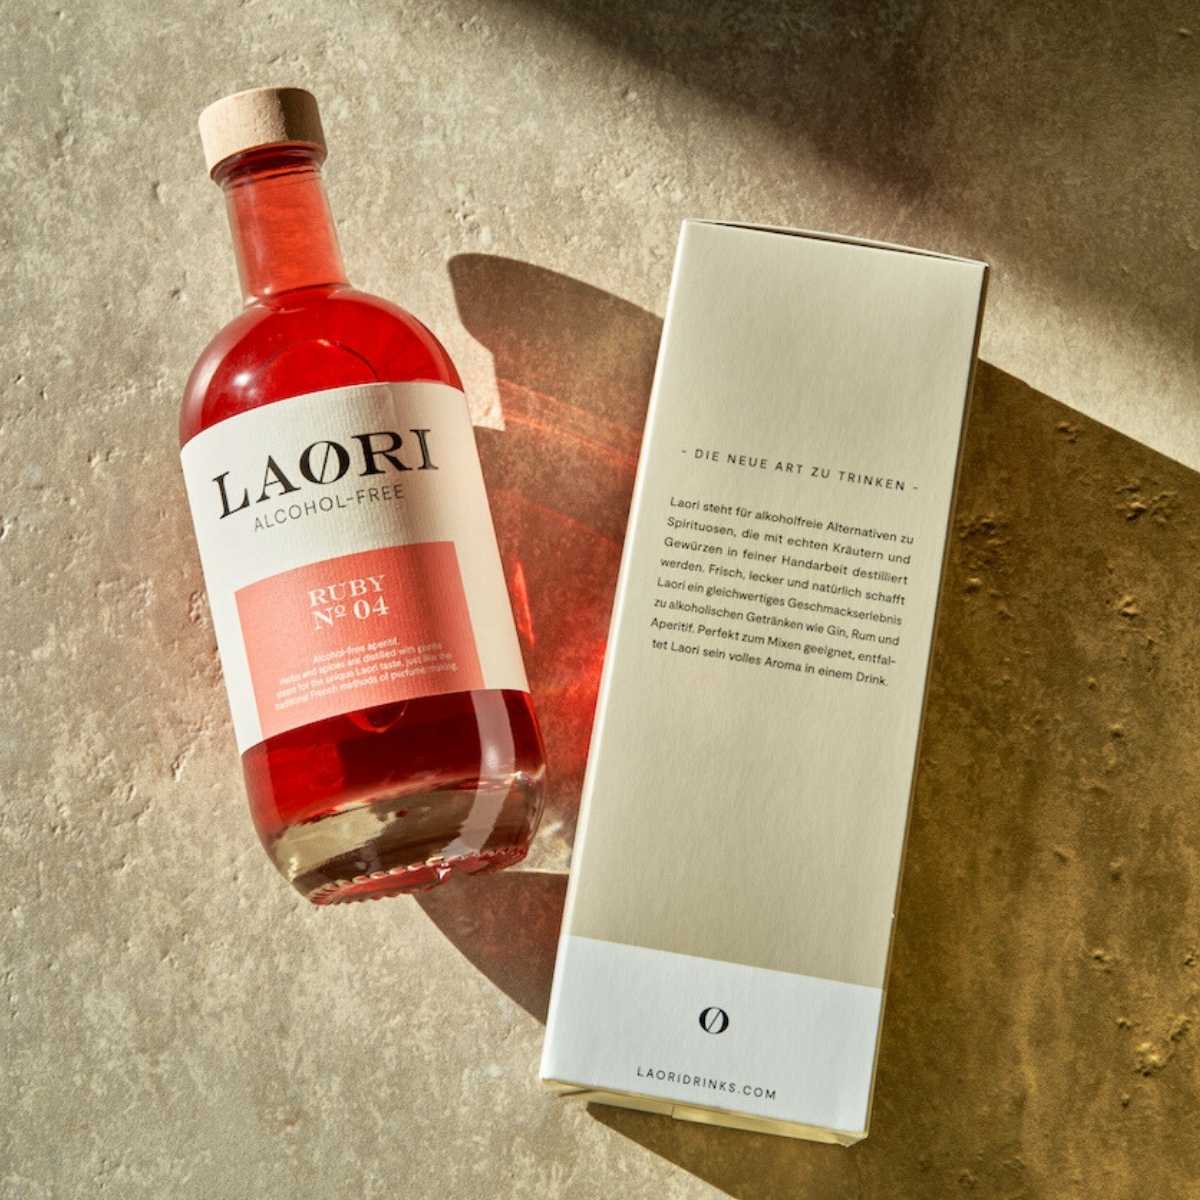 Laori Ruby No 04 (0.5l) in an elegant gift box